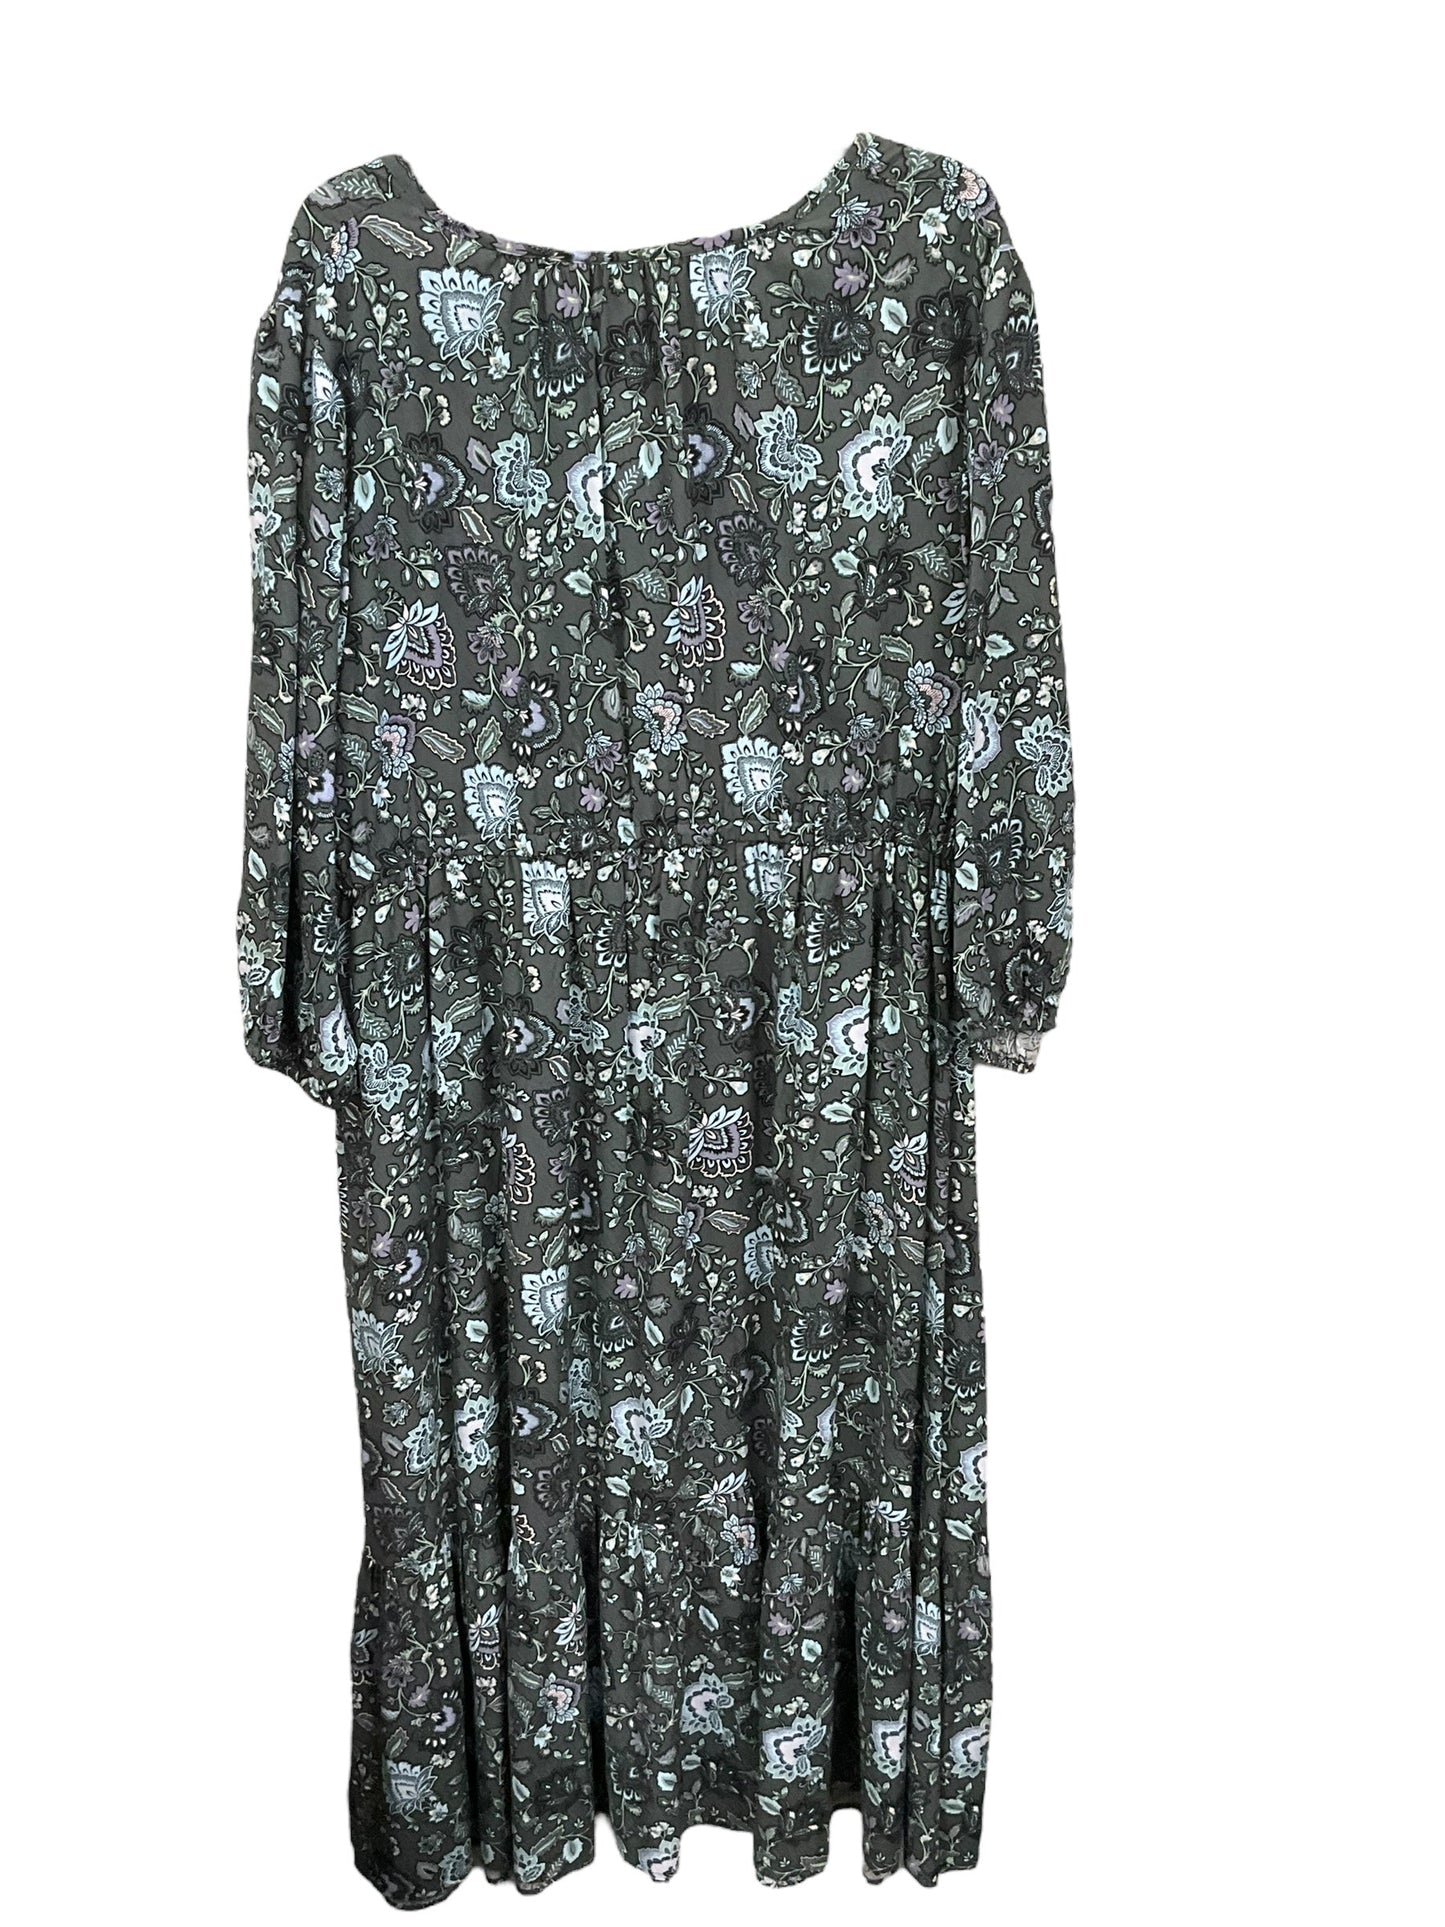 Multi-colored Dress Casual Maxi Torrid, Size 2x